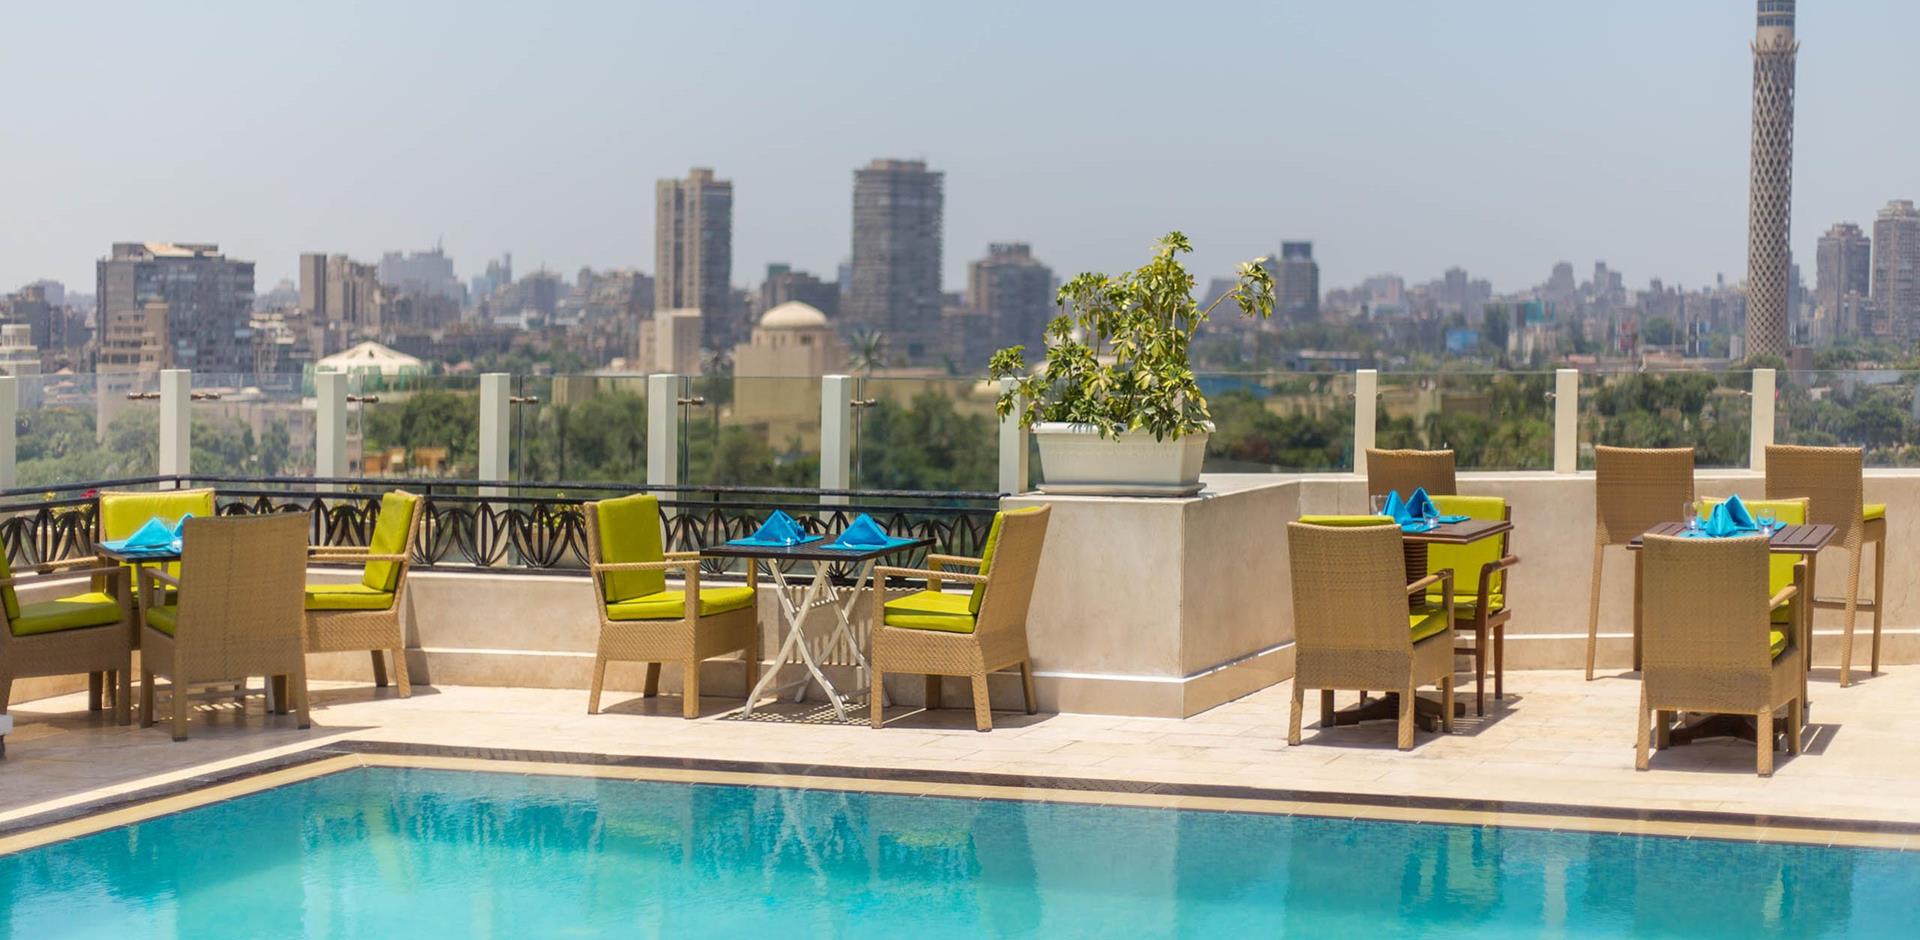 Kempinski Nile Hotel Garden City Cairo | Abercrombie & Kent